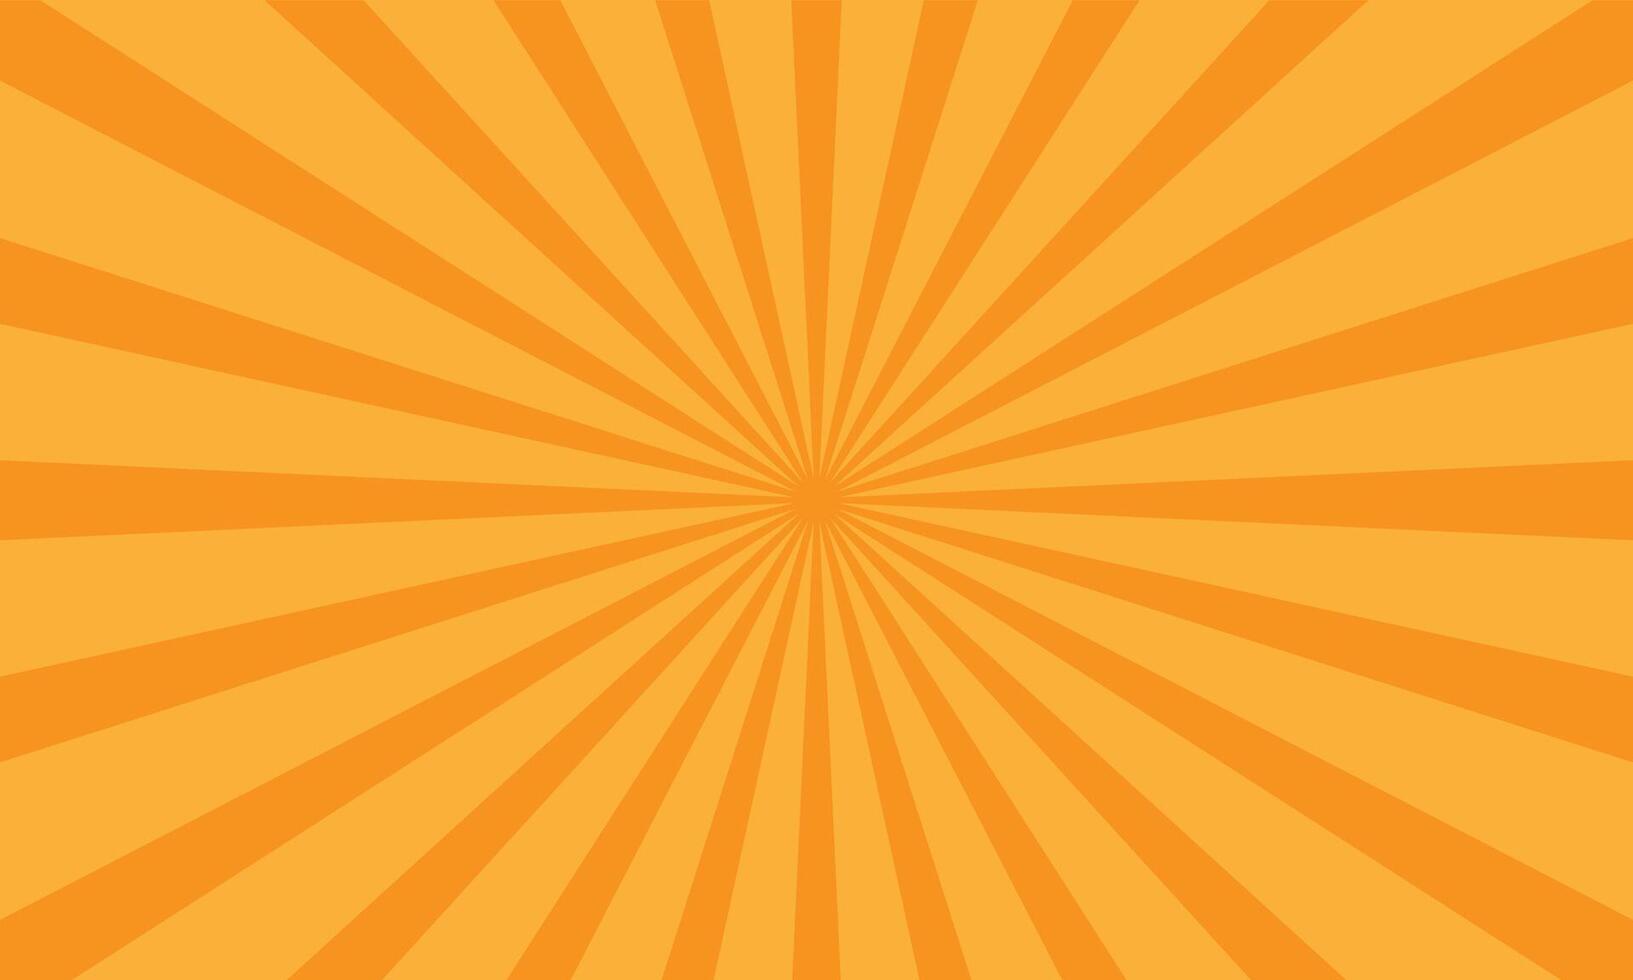 Orange sunburst background. Illustration vector